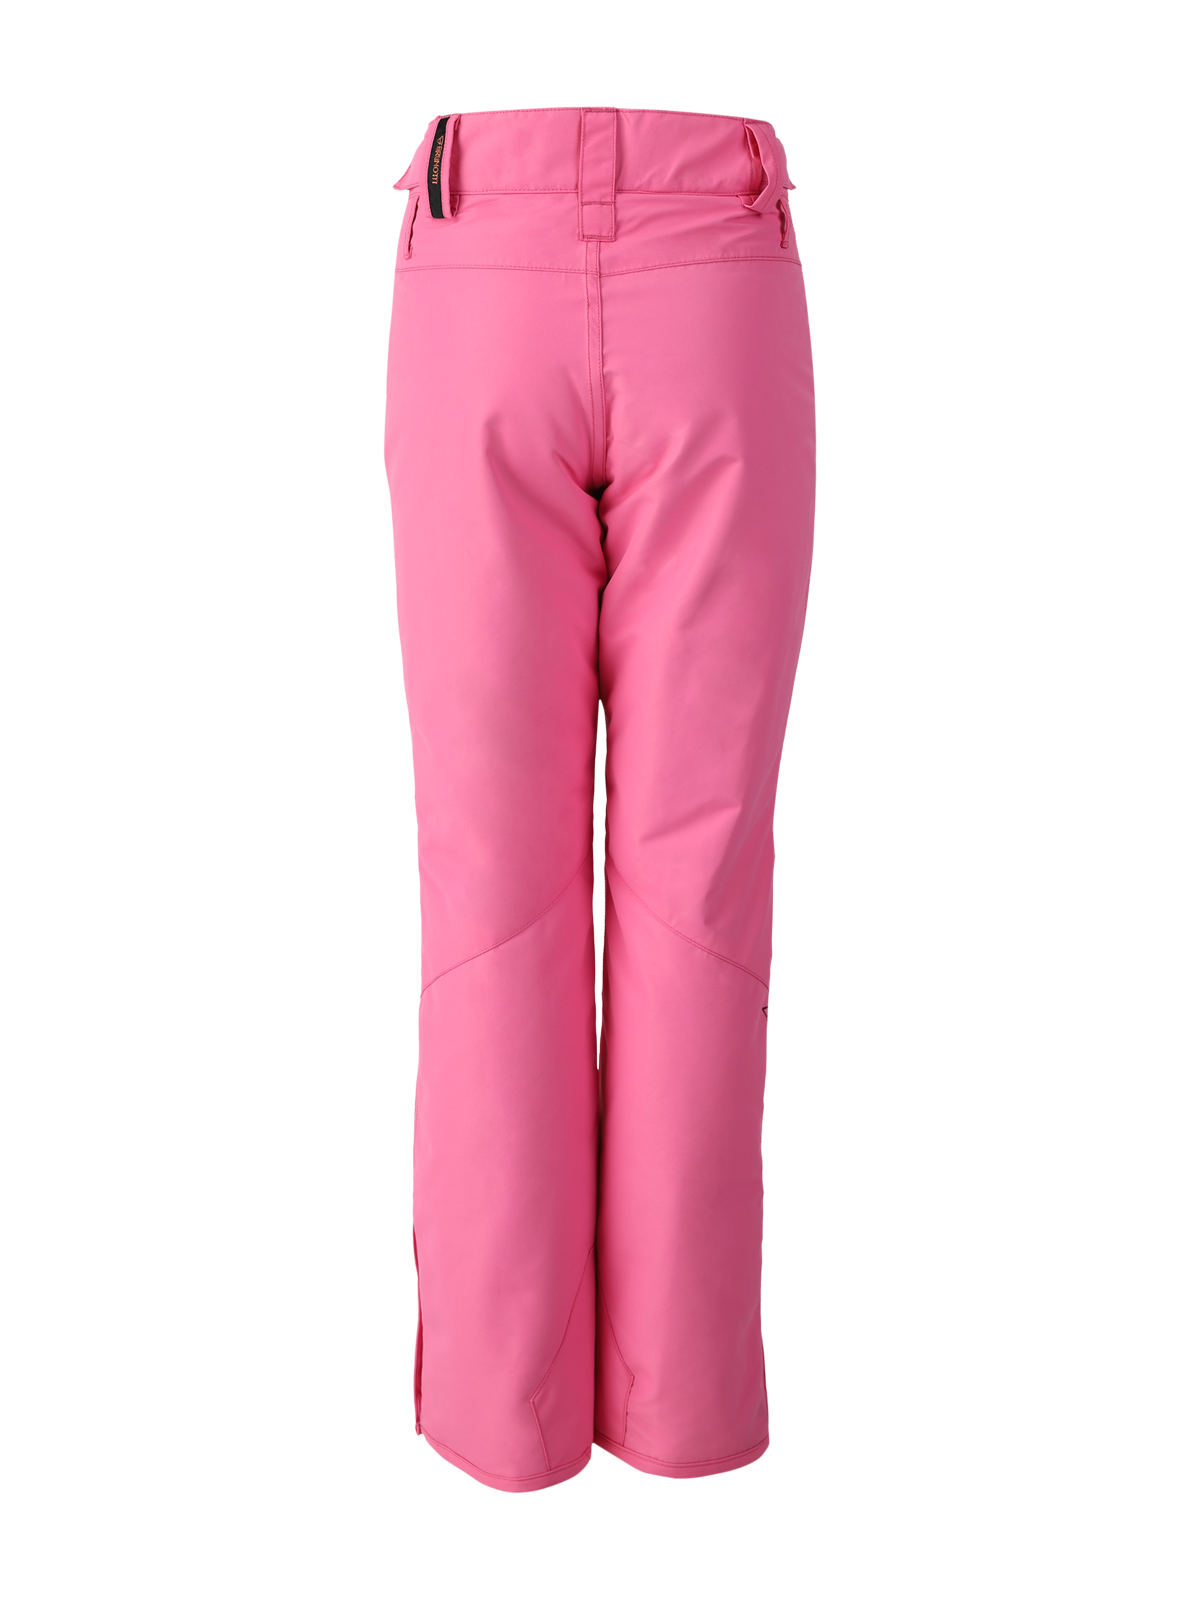 Belladonny Girls Snow Pants | Pink